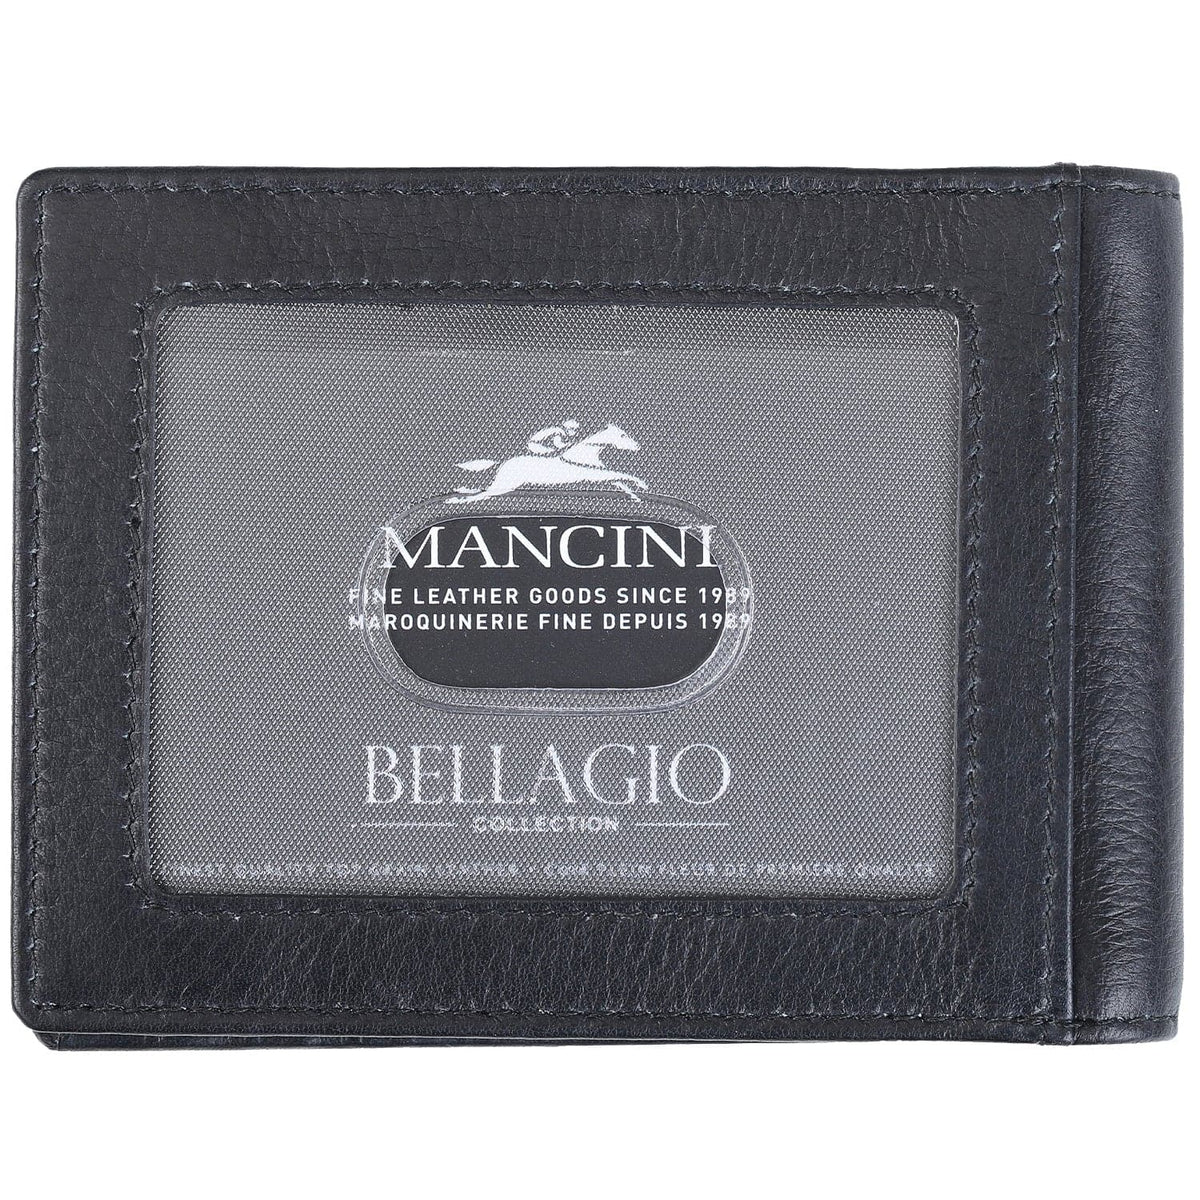 Mancini Bellagio RFID Deluxe Magnetic Bill Clip